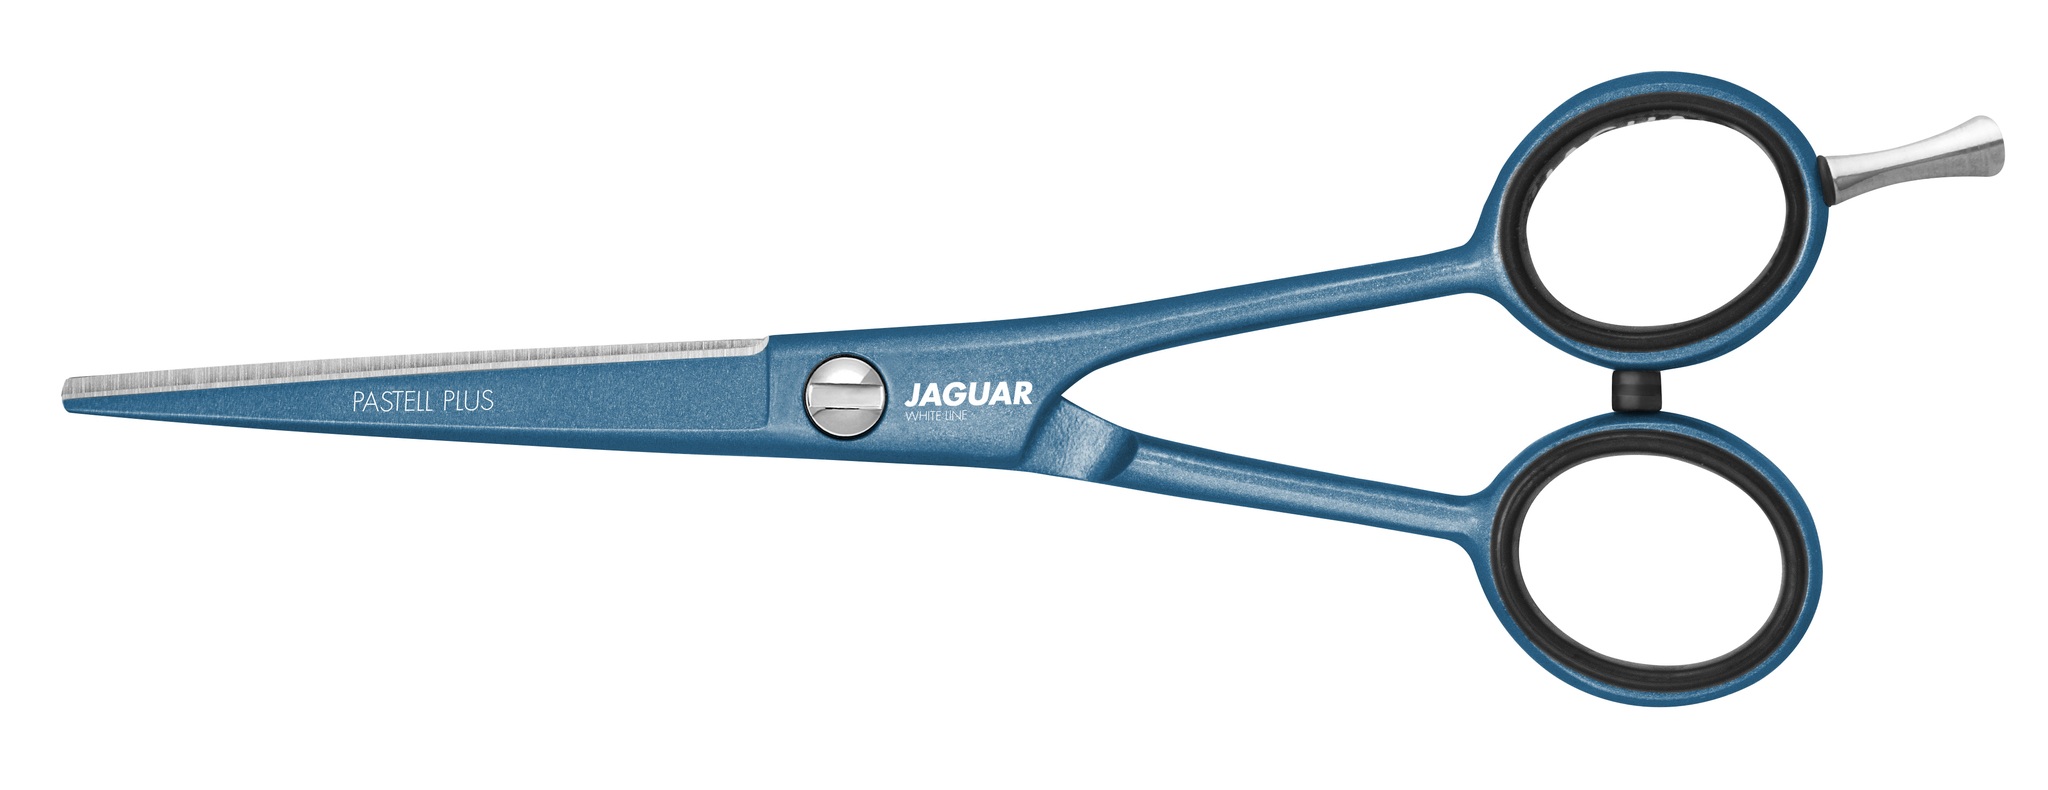 Jaguar White Line Pastell Plus (7 färger)